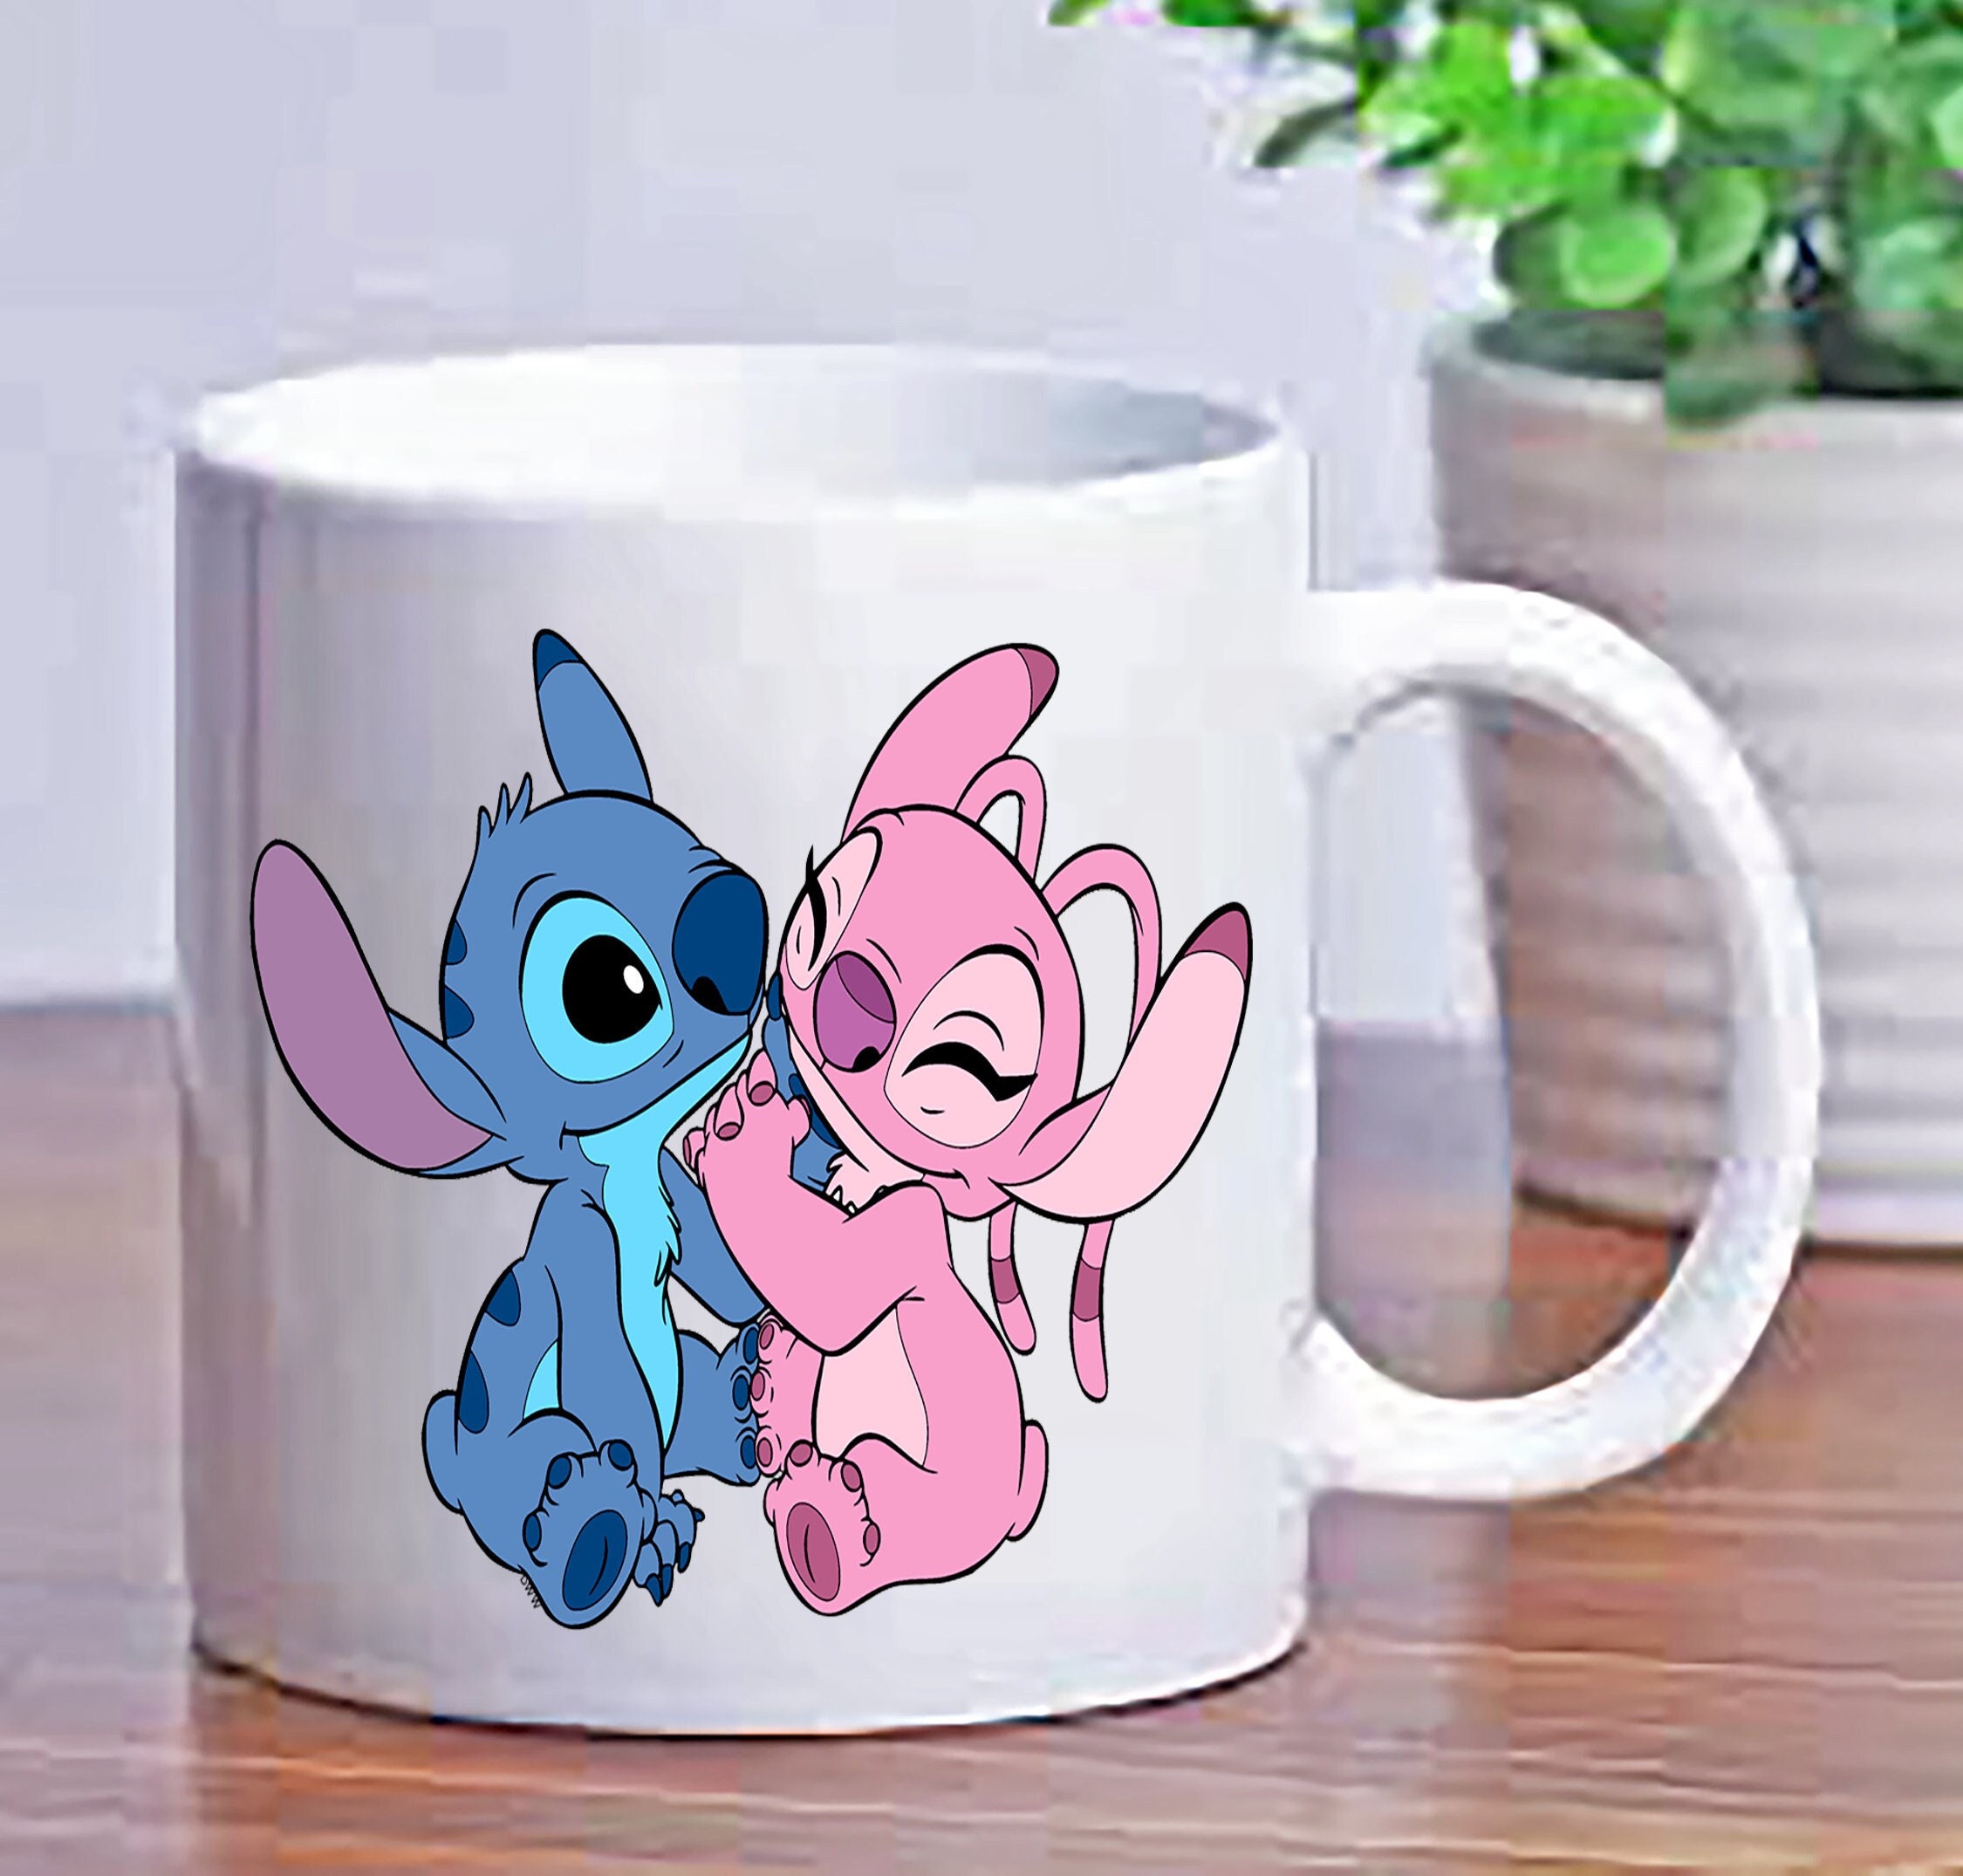  Disney Stitch SAN3390 Mug, Pair, 10.1 fl oz (300 ml) : Home &  Kitchen